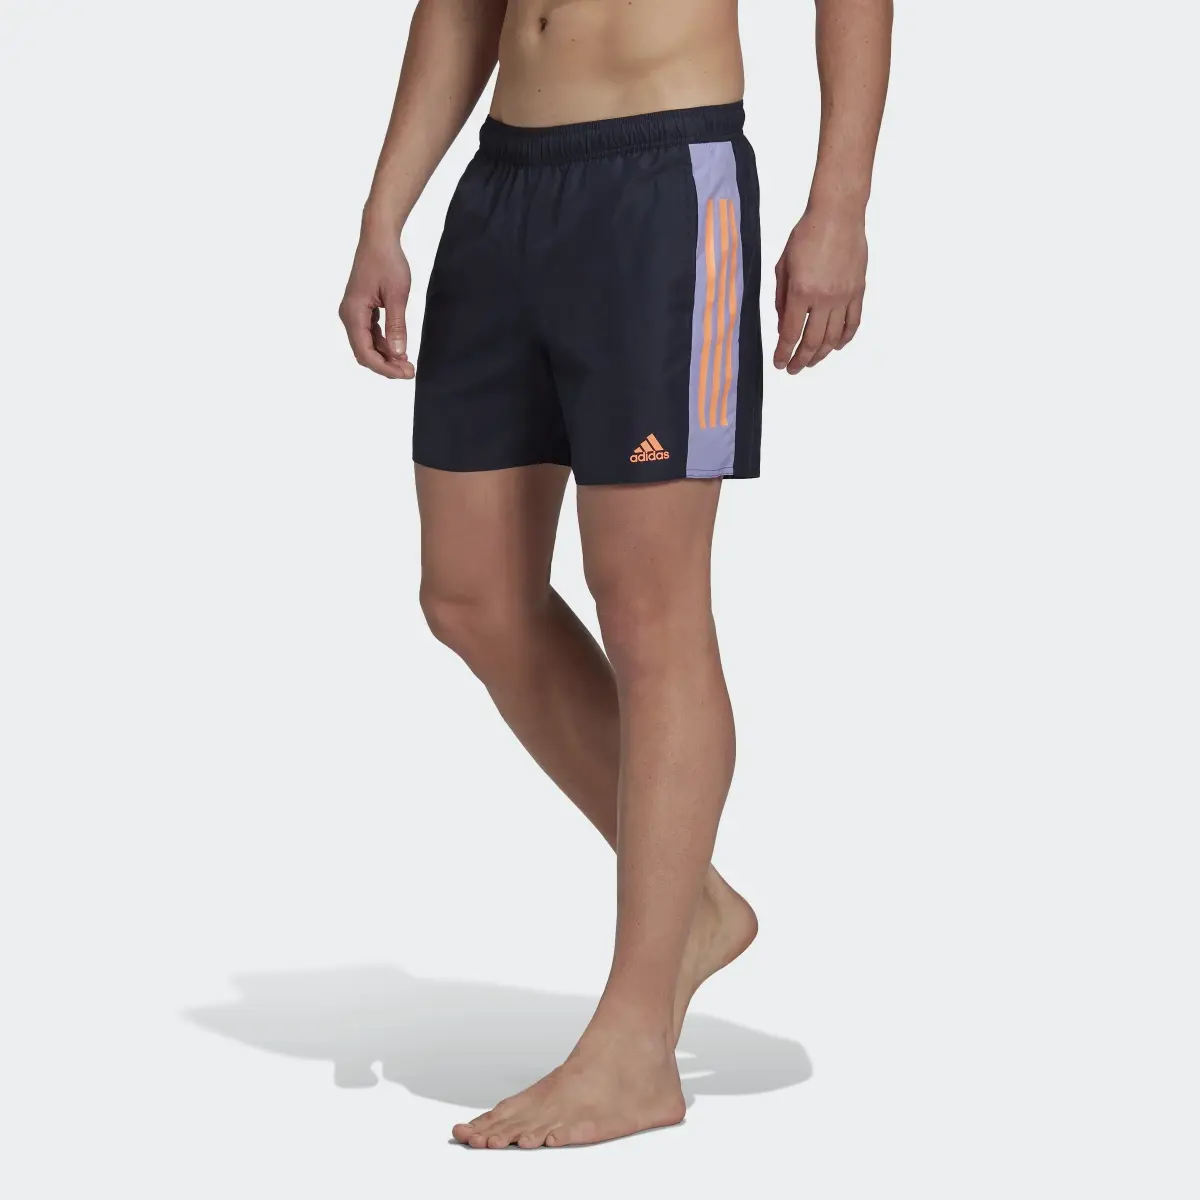 Adidas Short Length Colorblock 3-Stripes Swim Shorts. 1